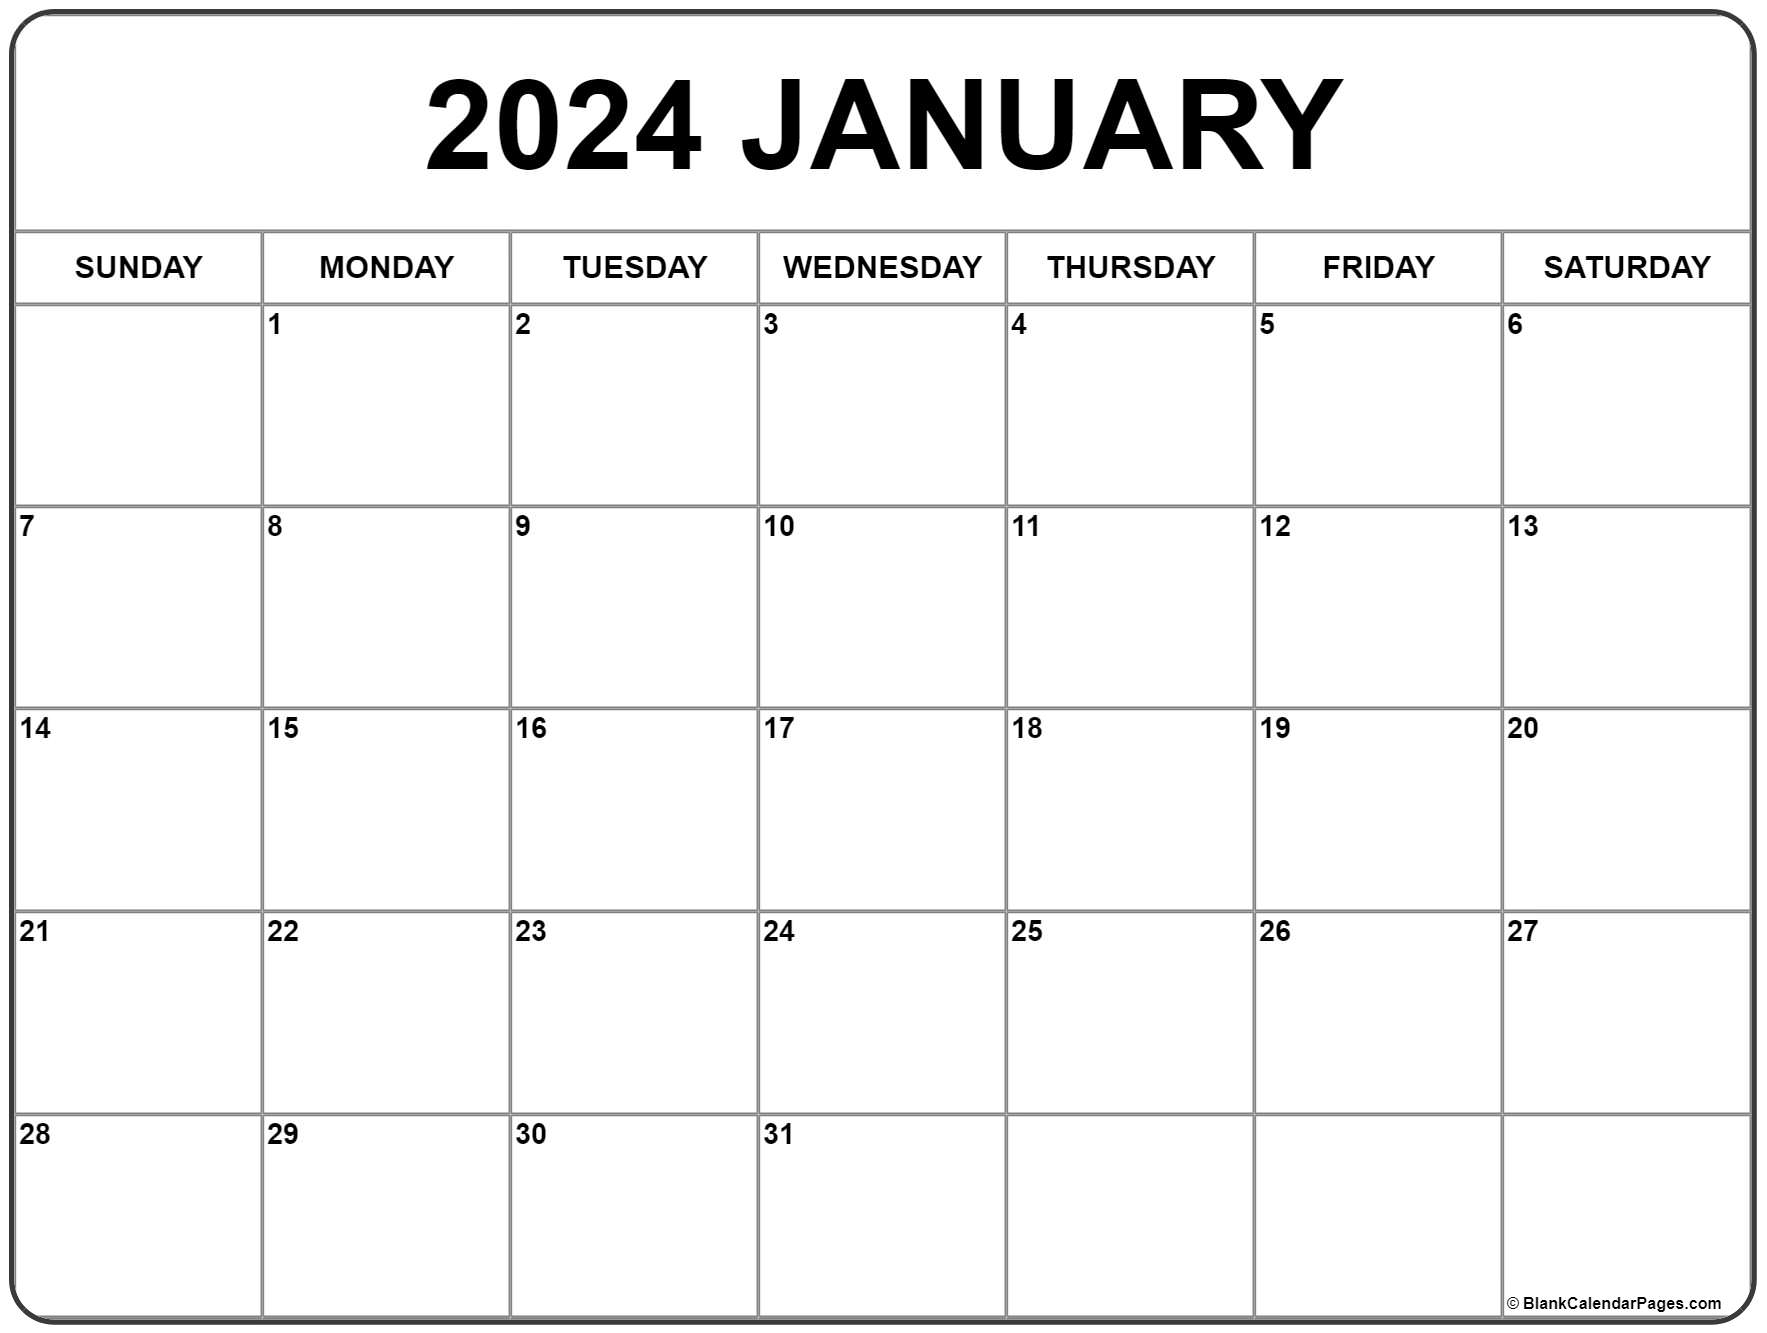 Print A Calendar January 2022 January 2022 Calendar | Free Printable Calendar Templates